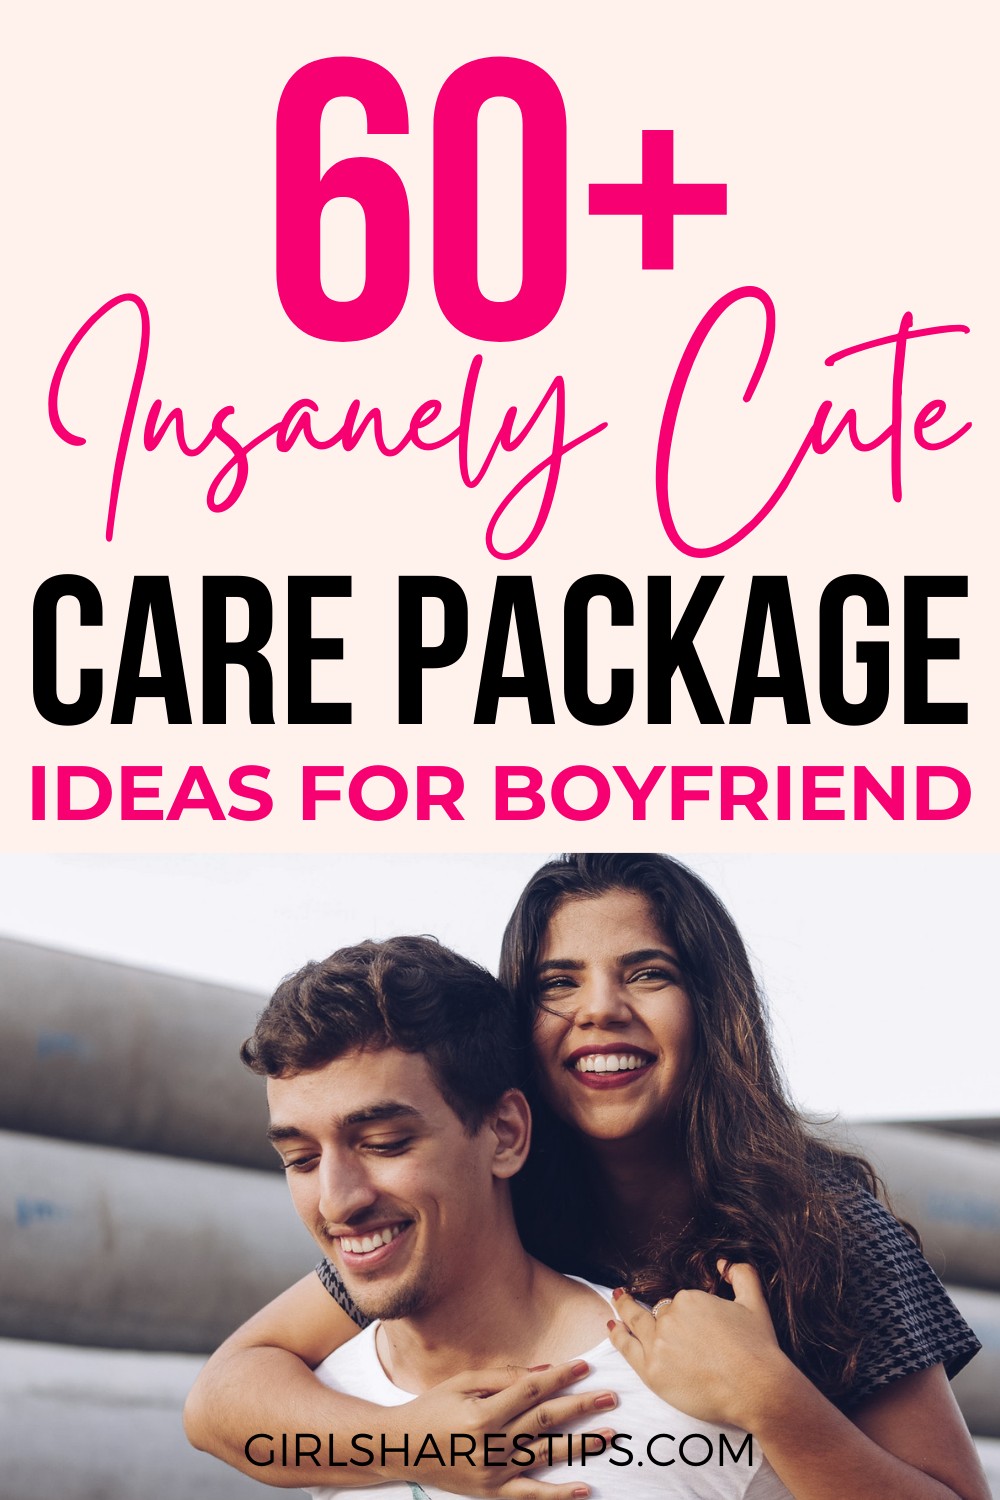 care package ideas for boyfriend